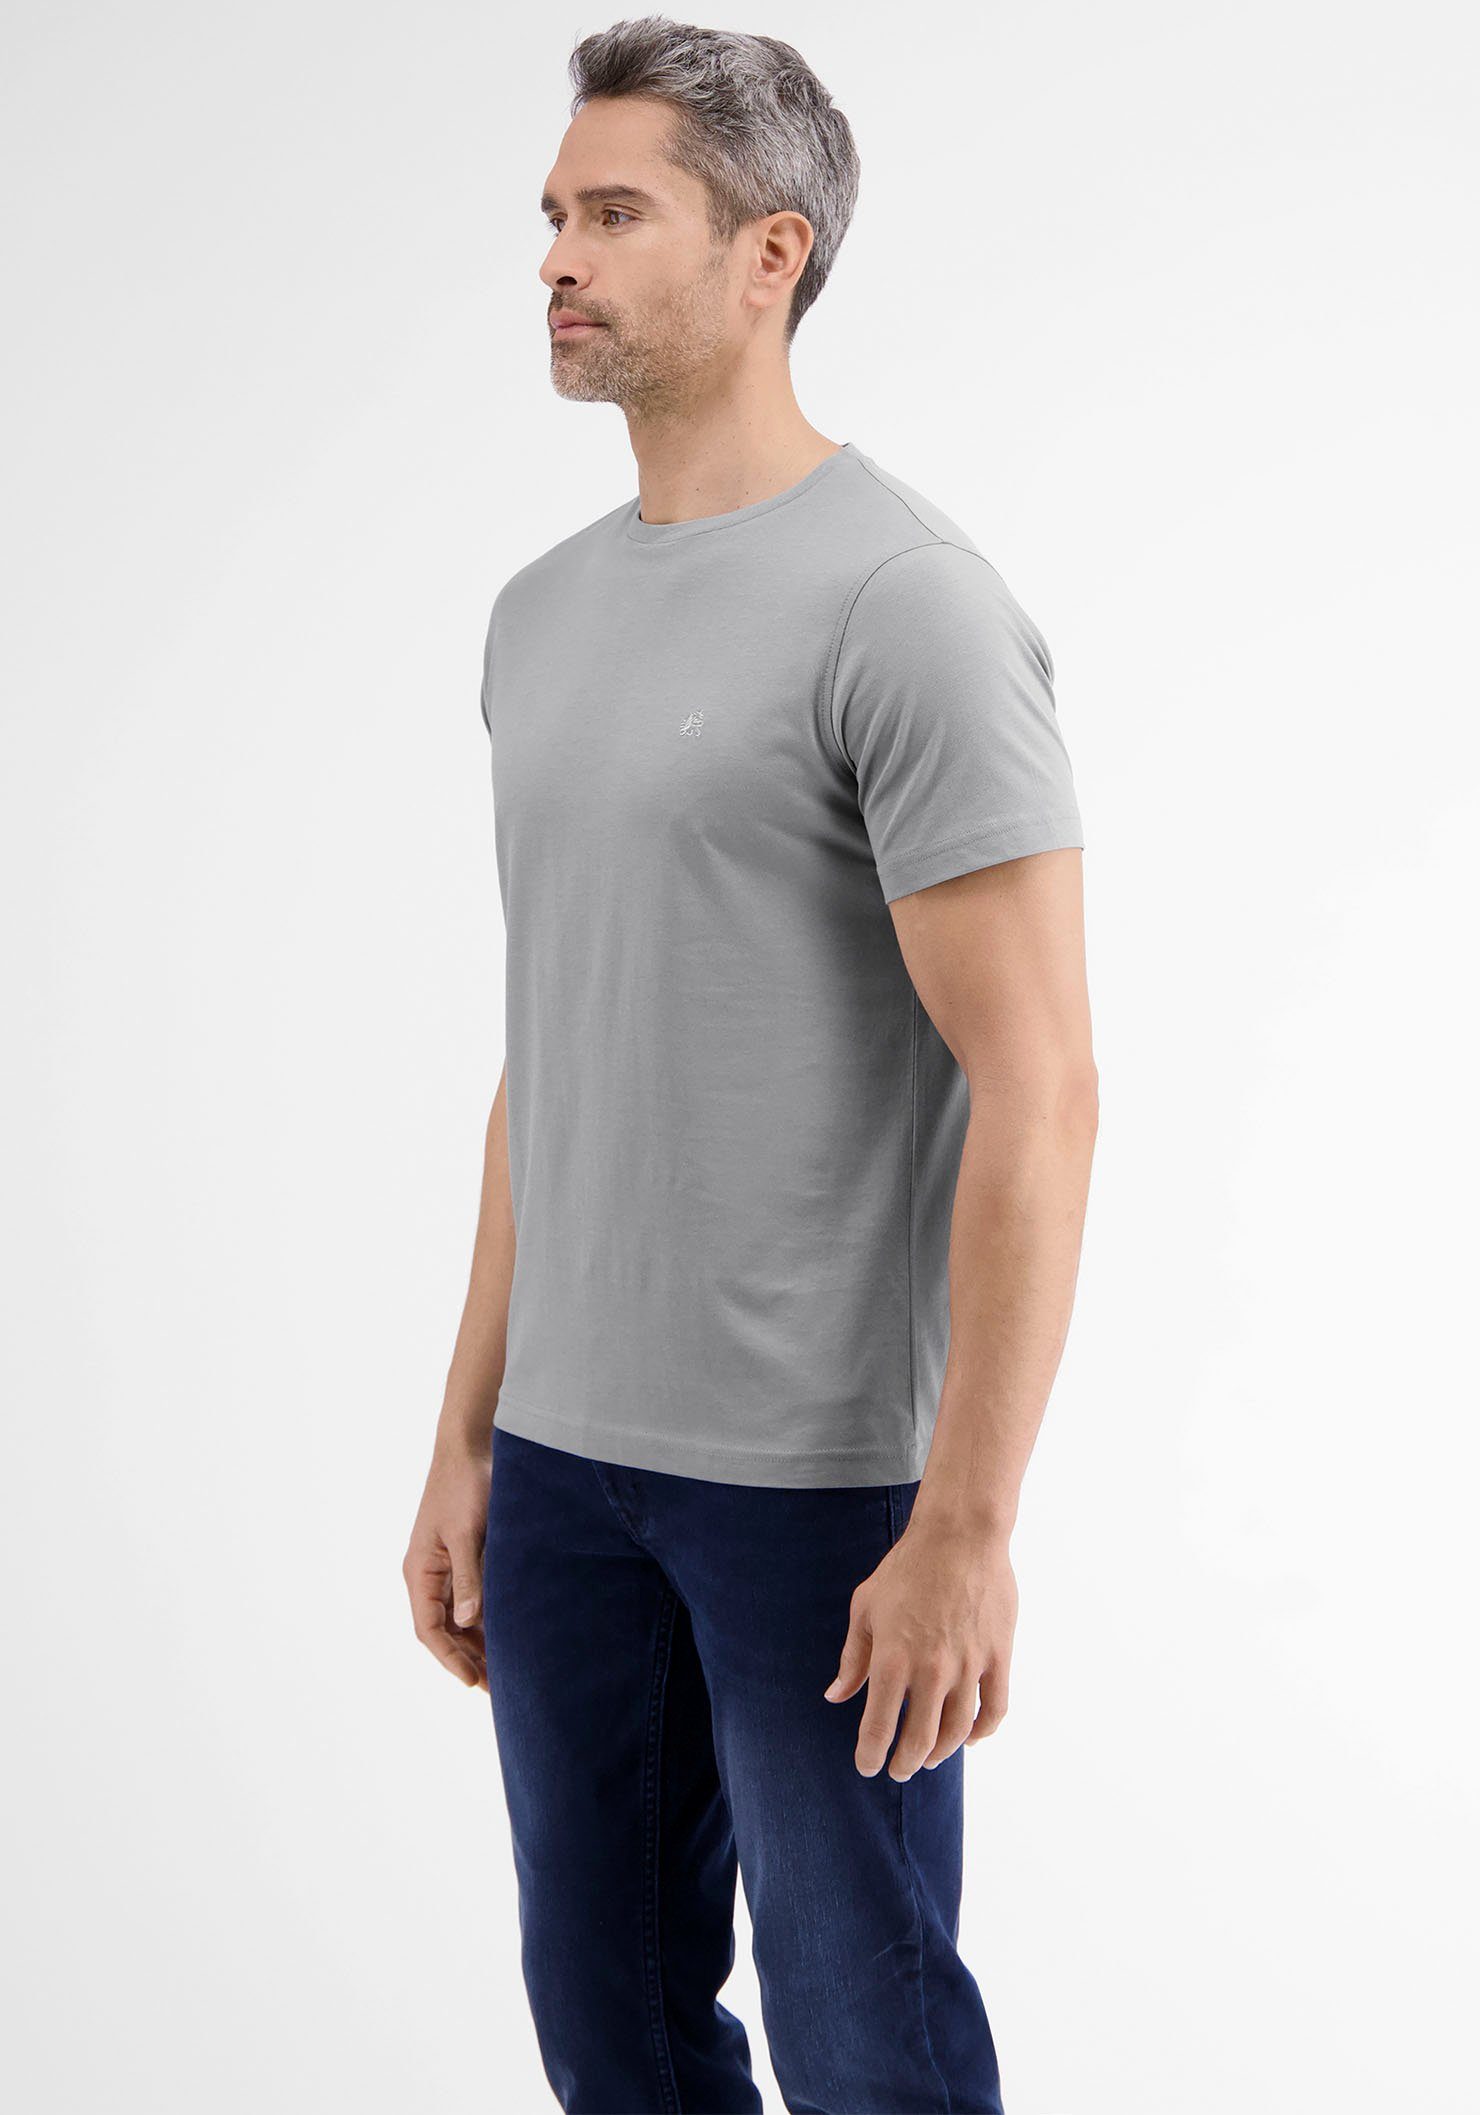 T-Shirt LERROS grey platinum Basic-Look im